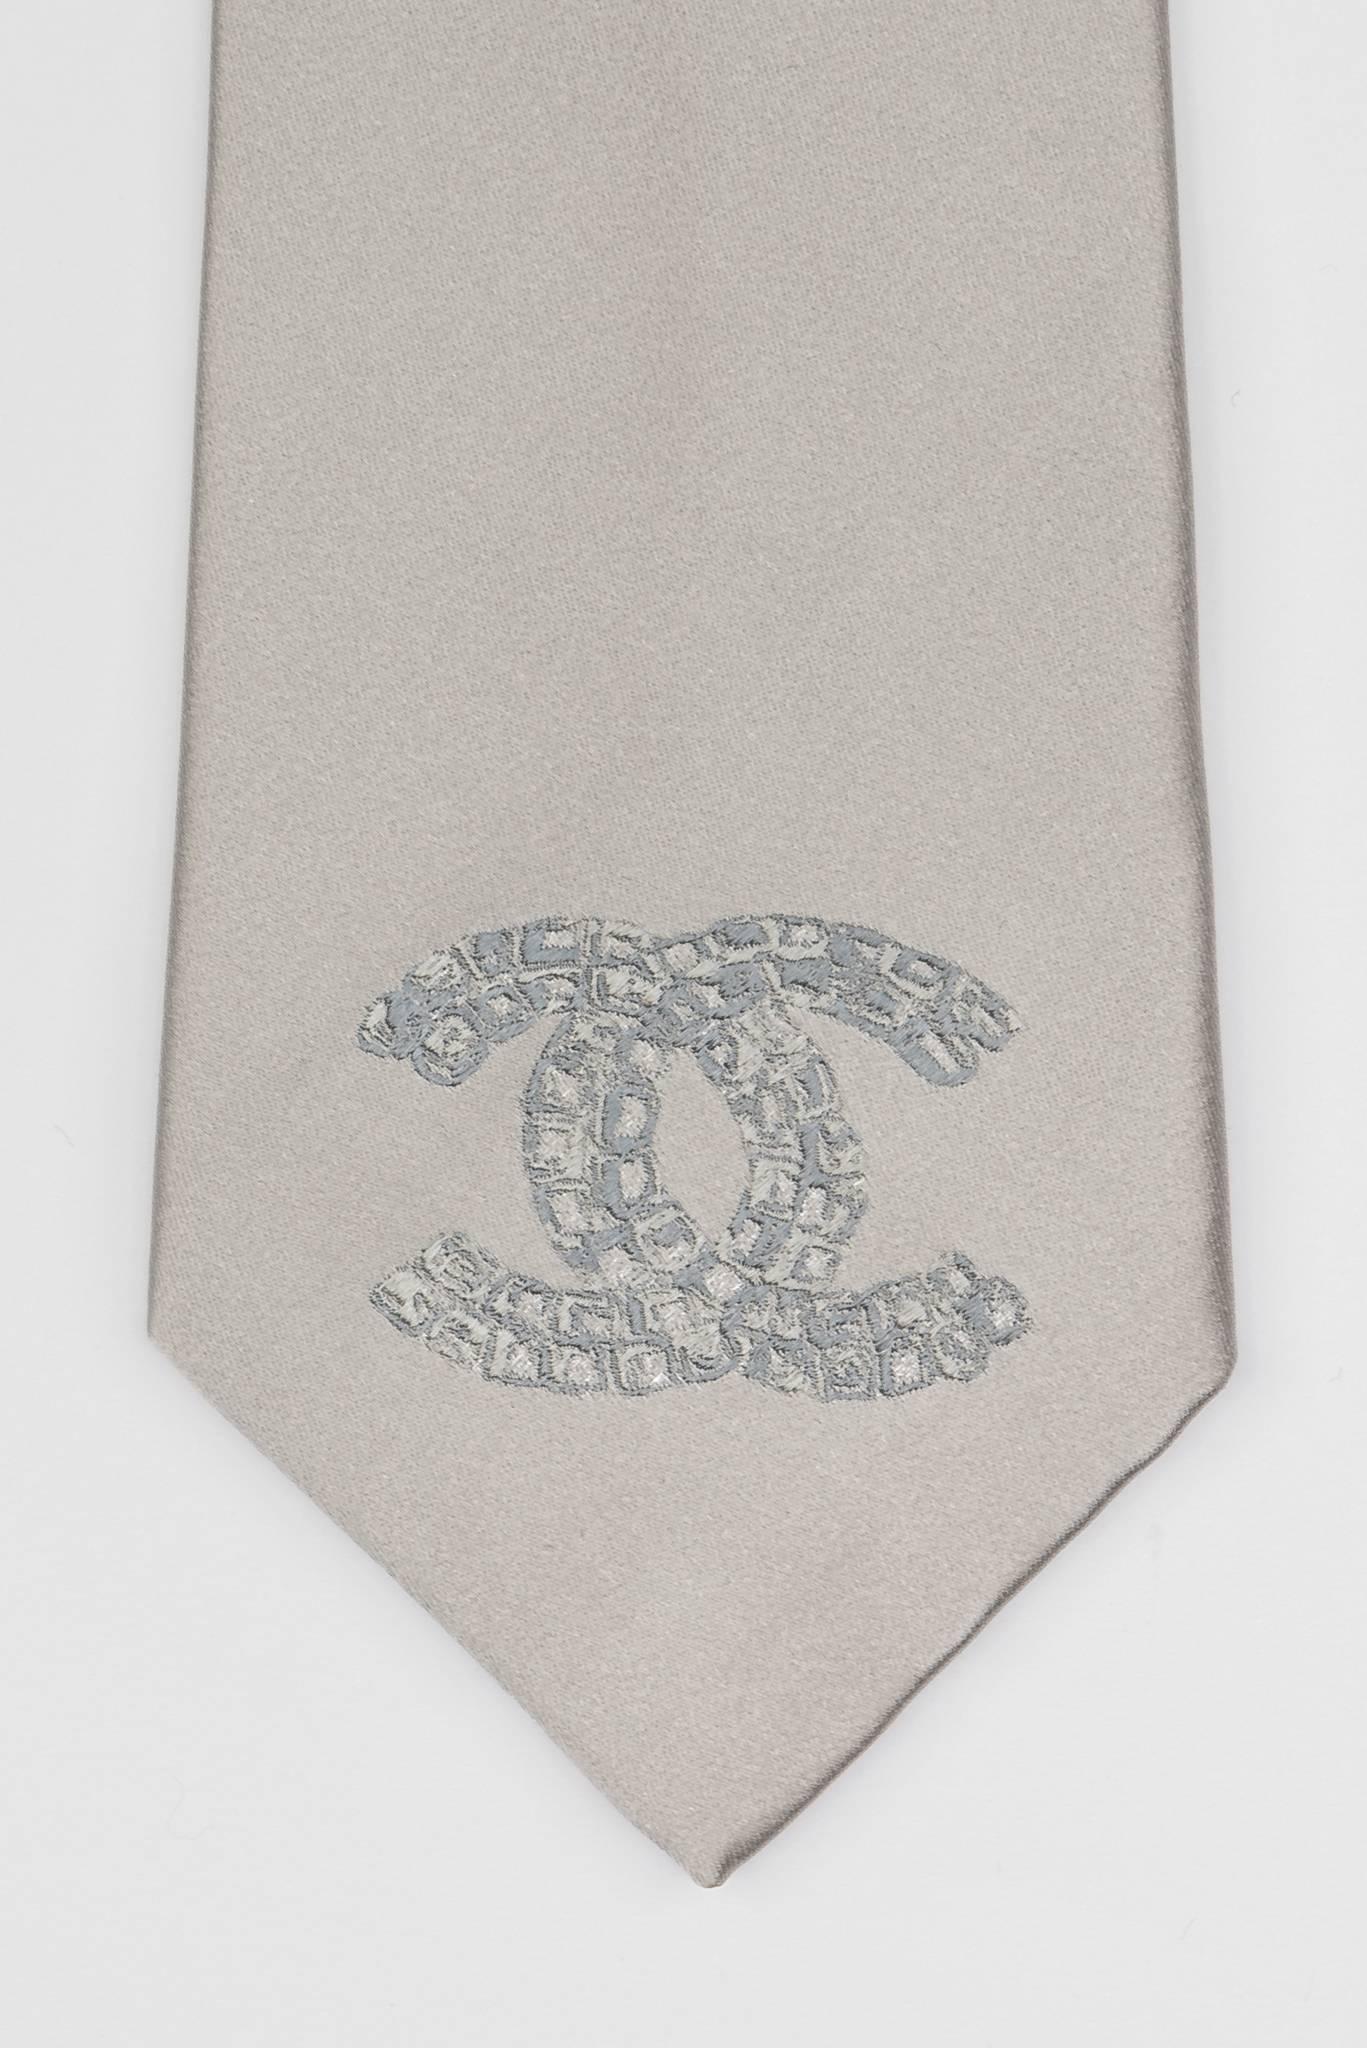 Chanel Silver CC Logo Silk Tie 1